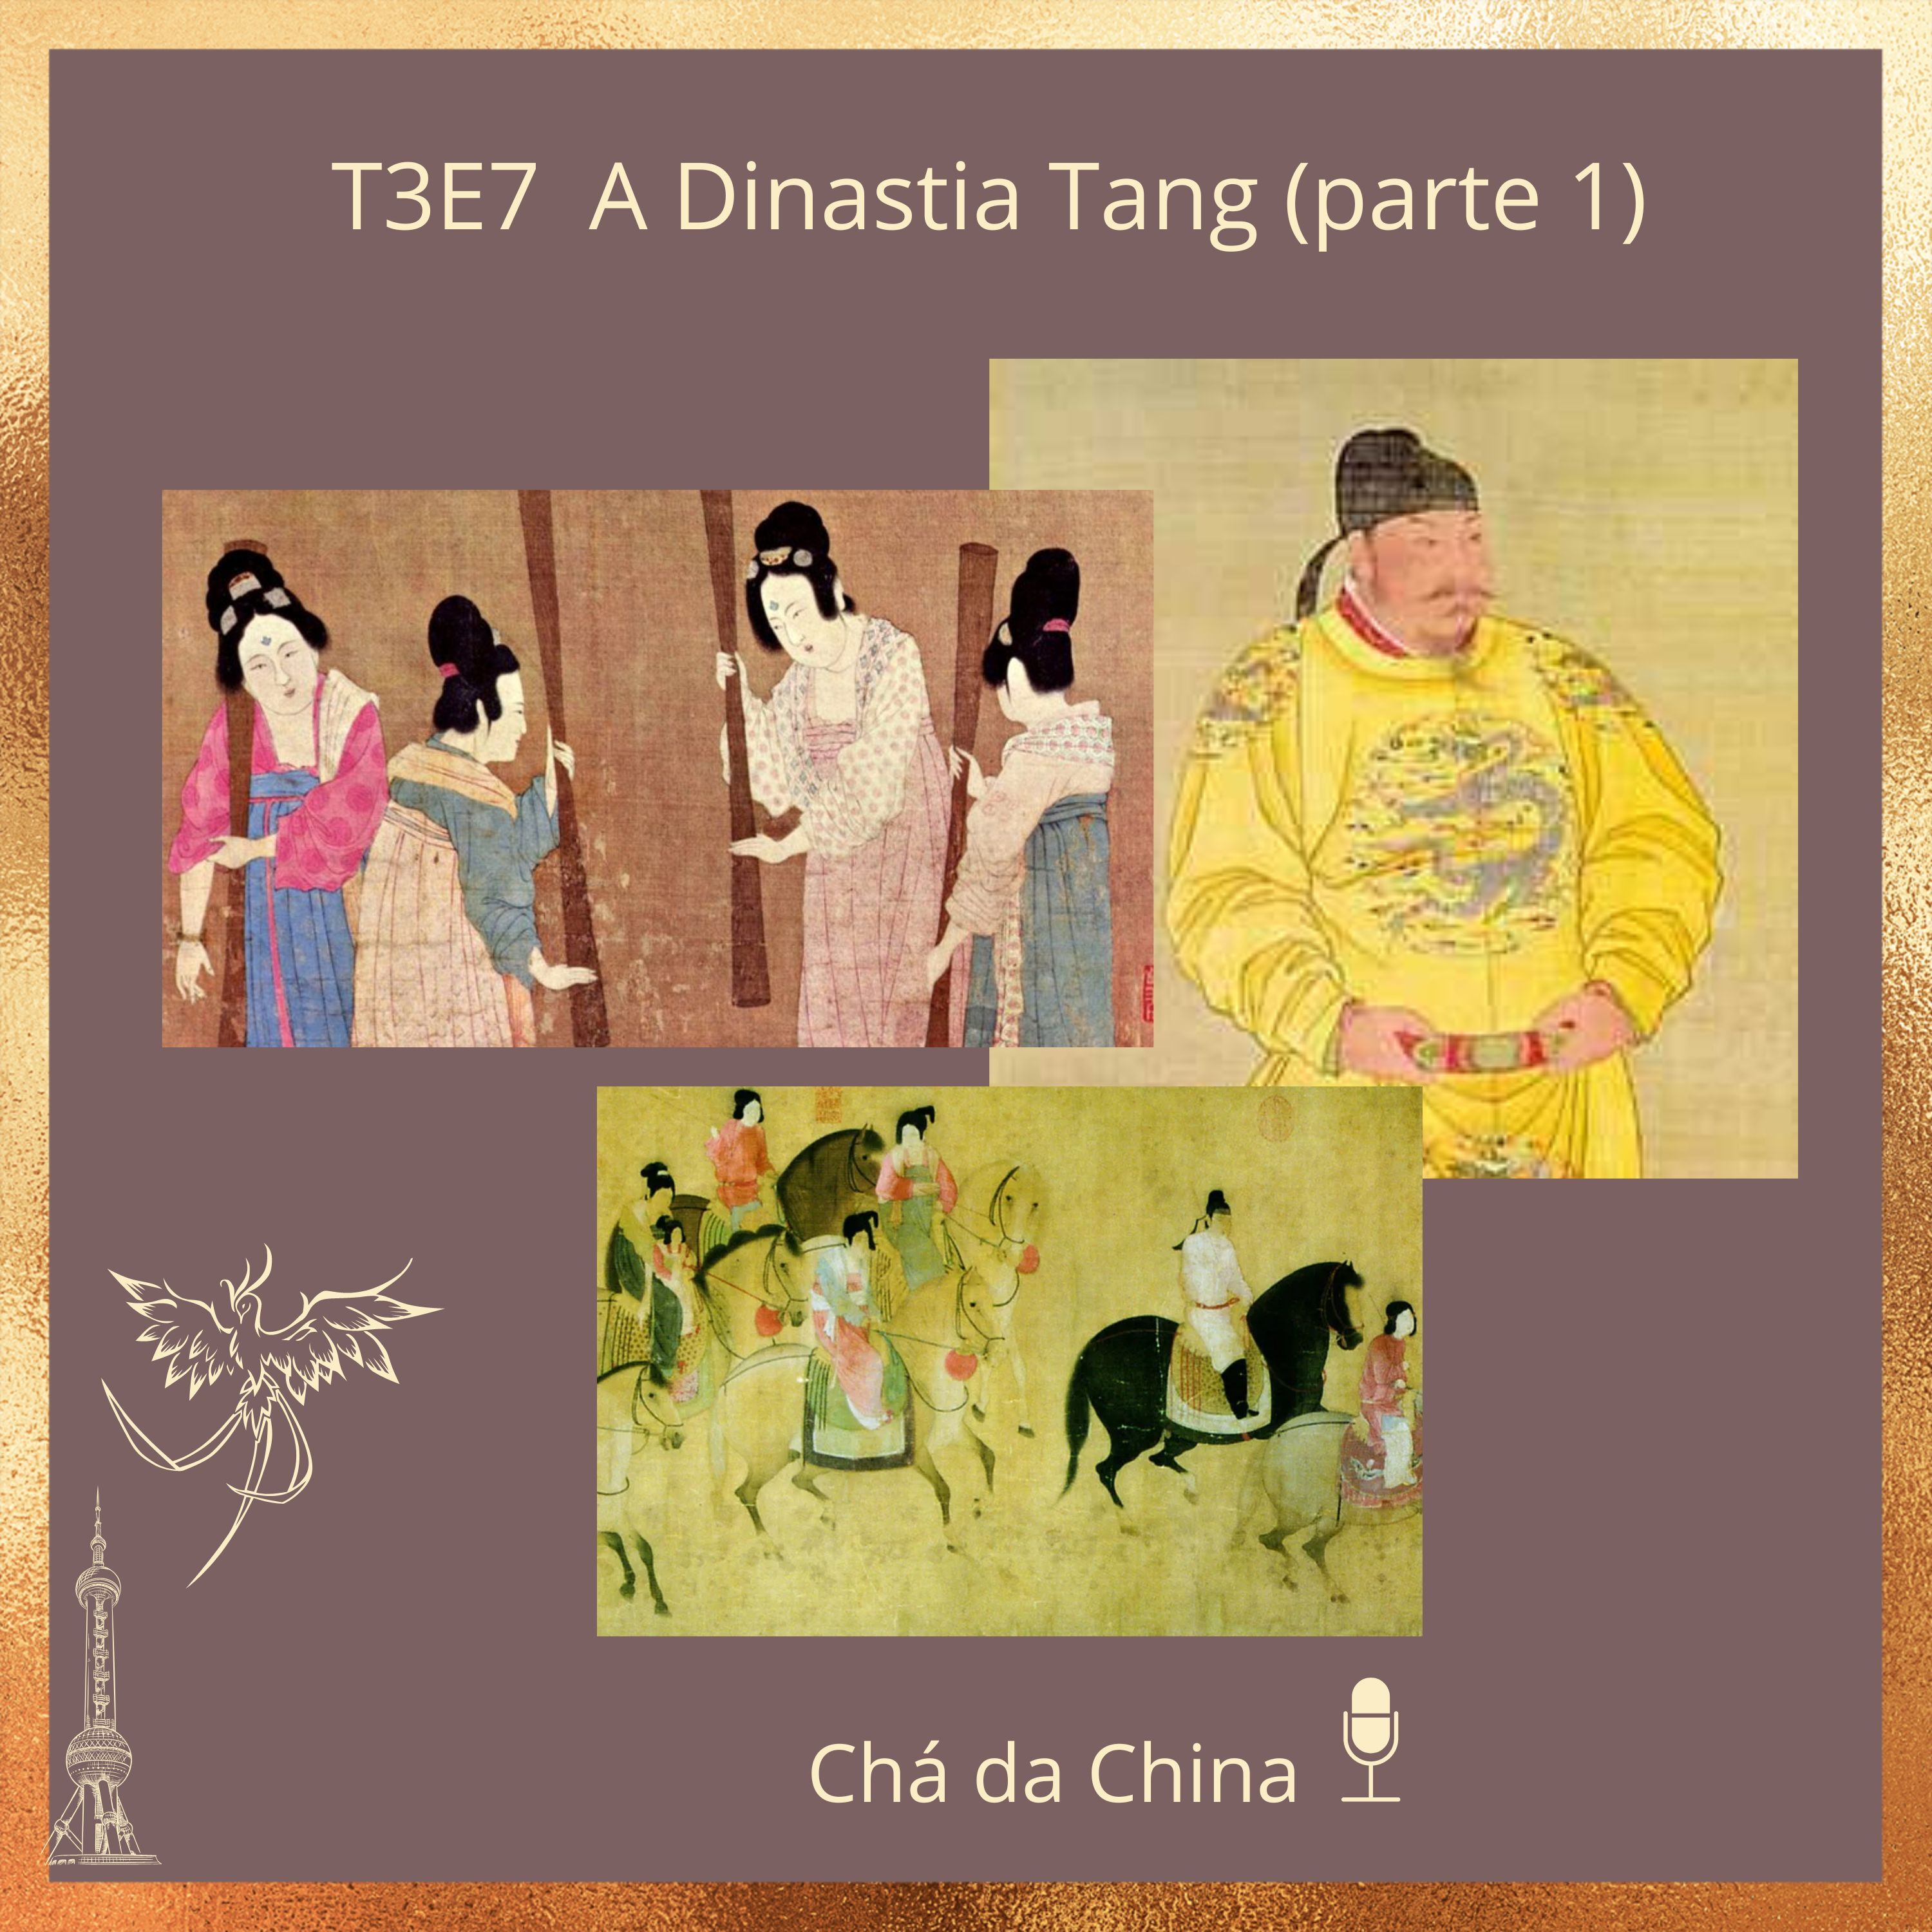 T3E7_-_Dinastia_Tang-pt1-capa_7yixa.jpg